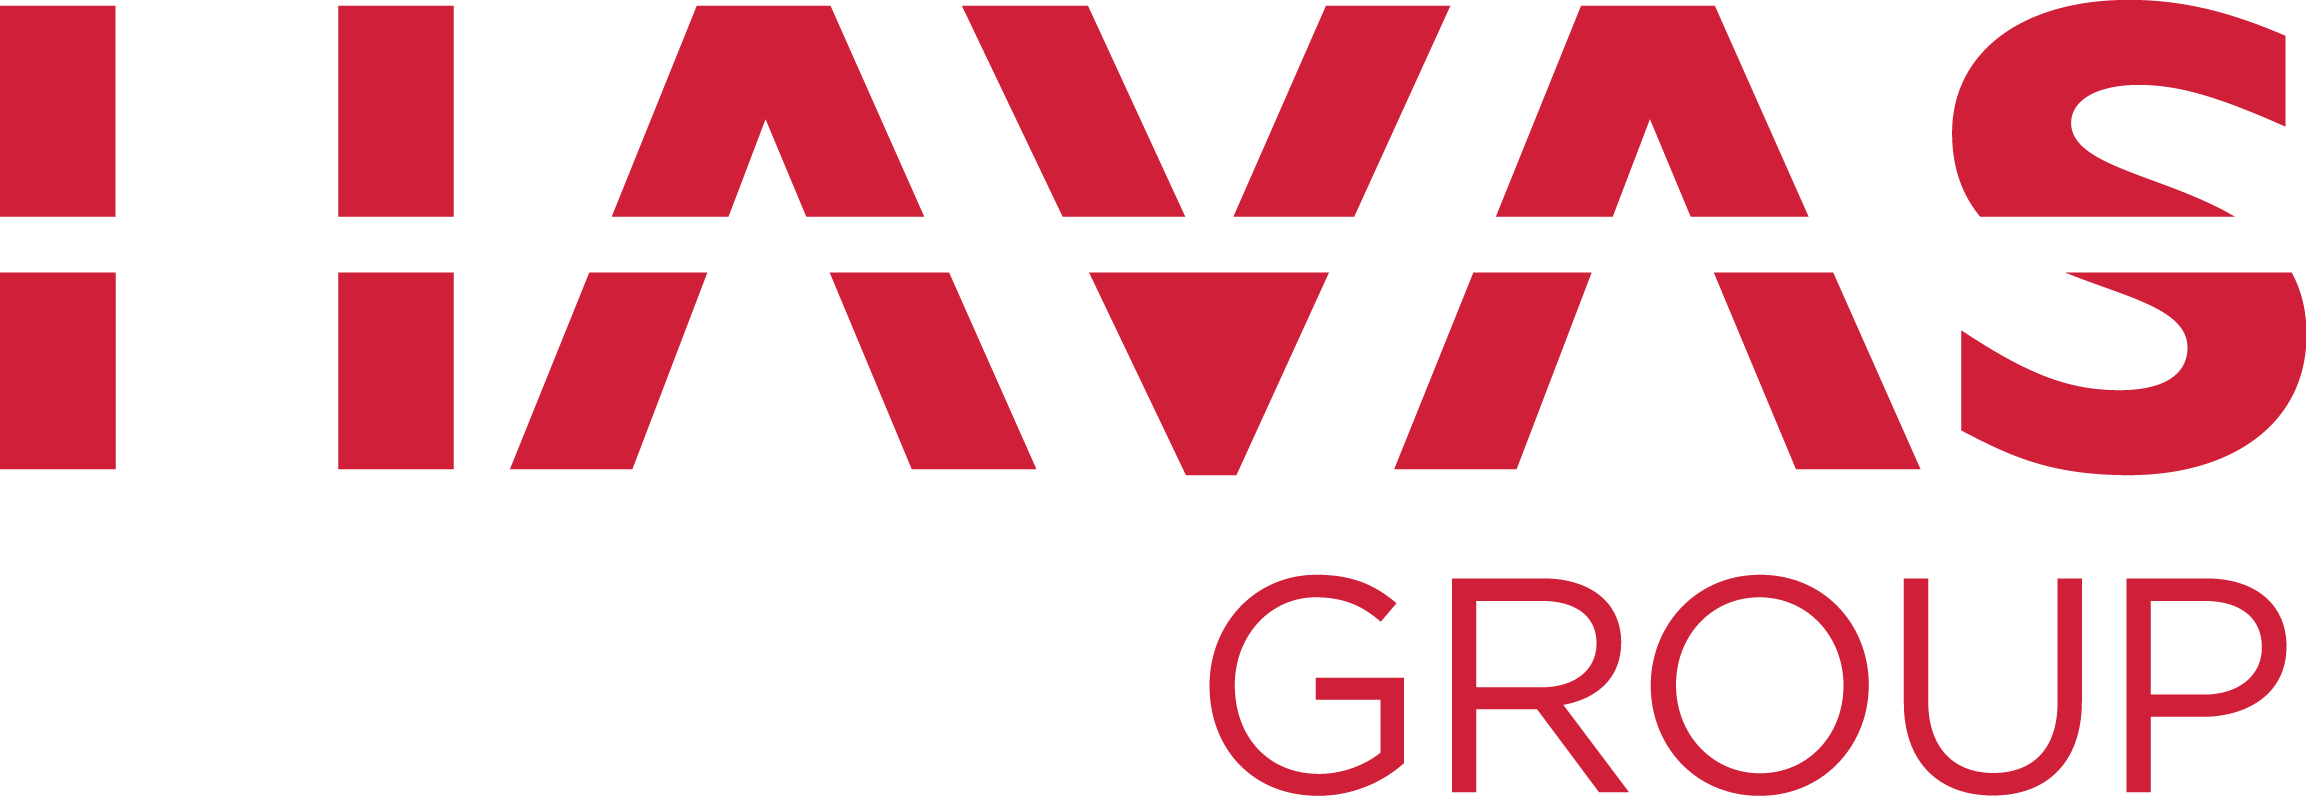 havas group logo